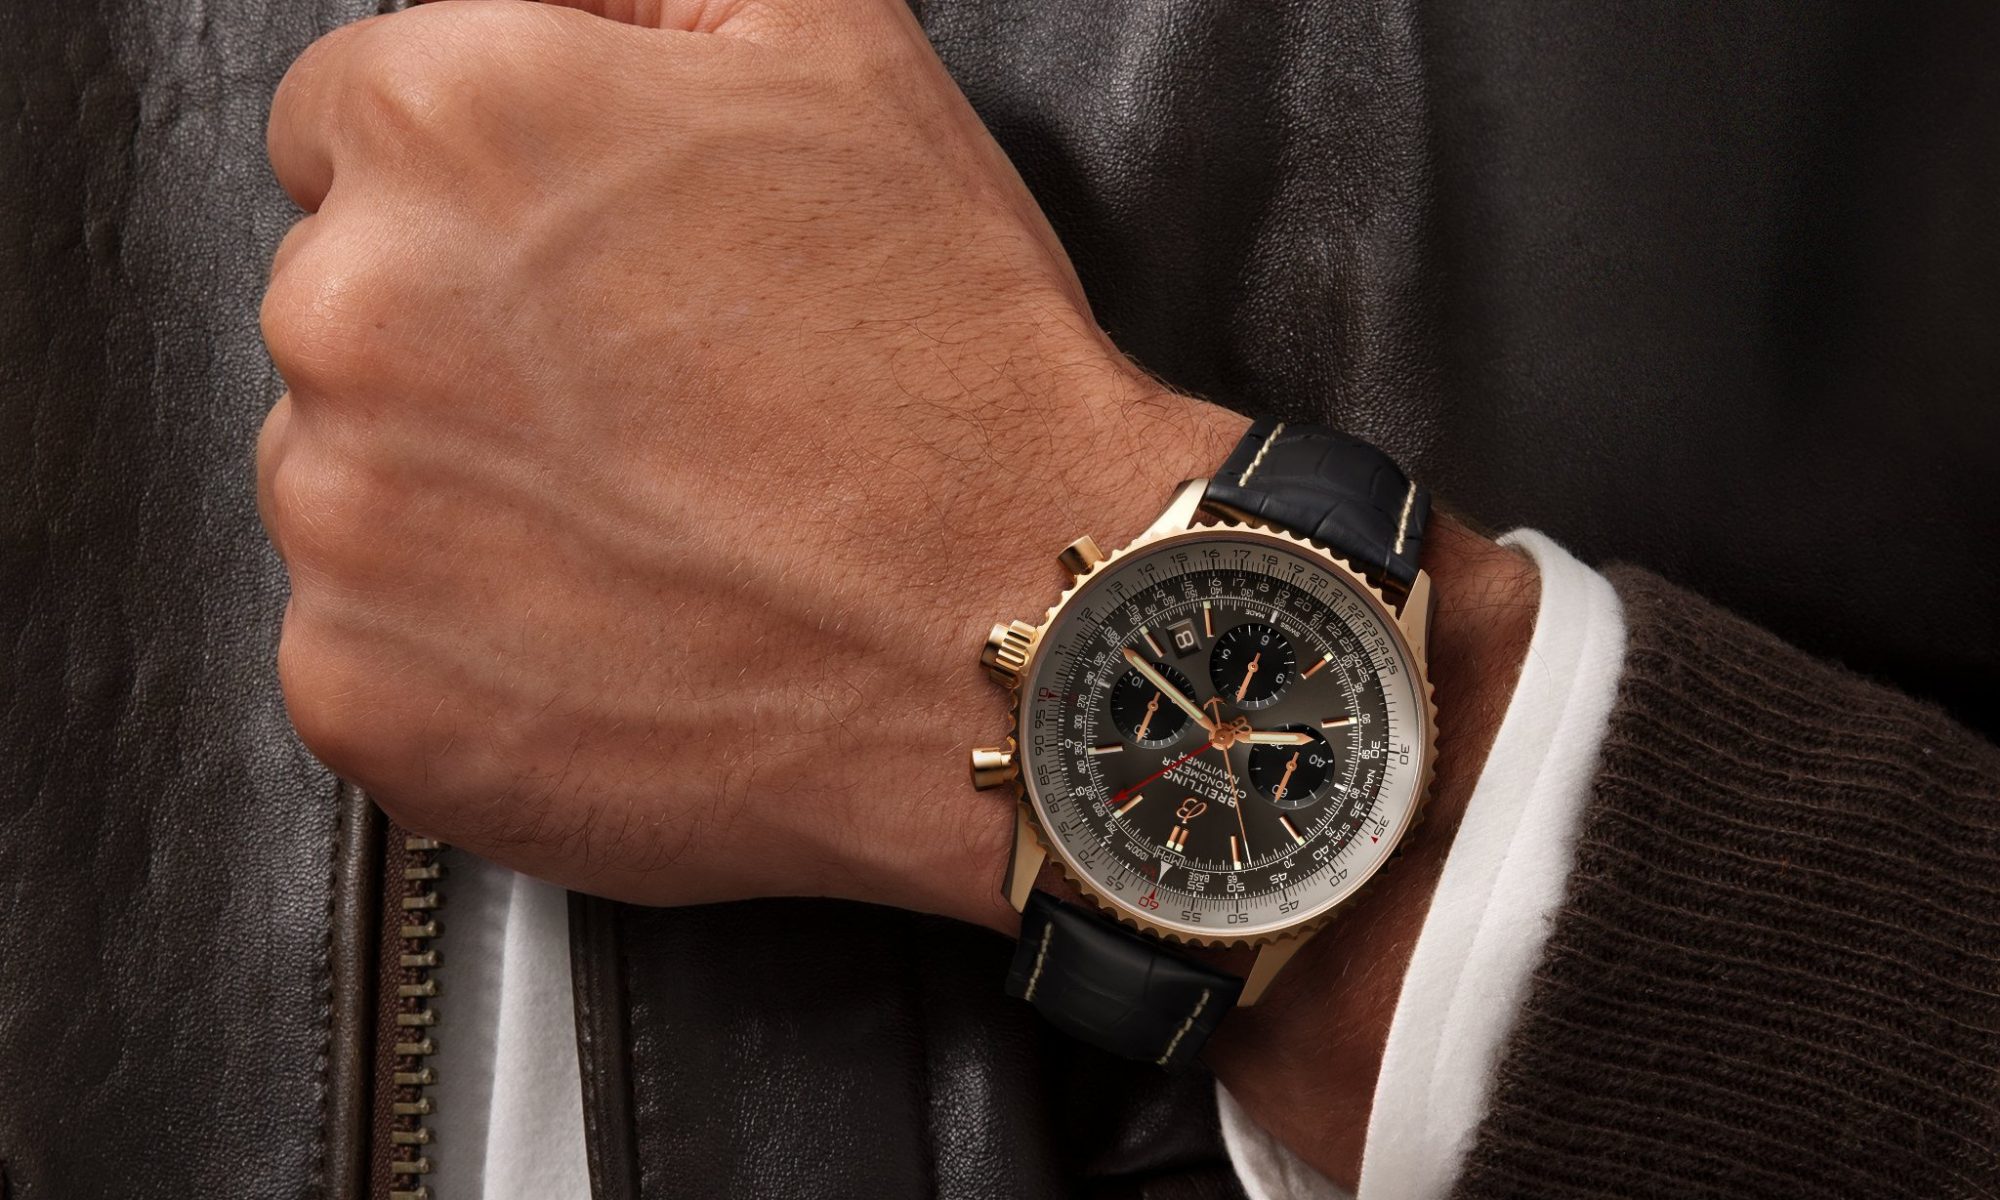 The 45 mm replica watch has grey dial.